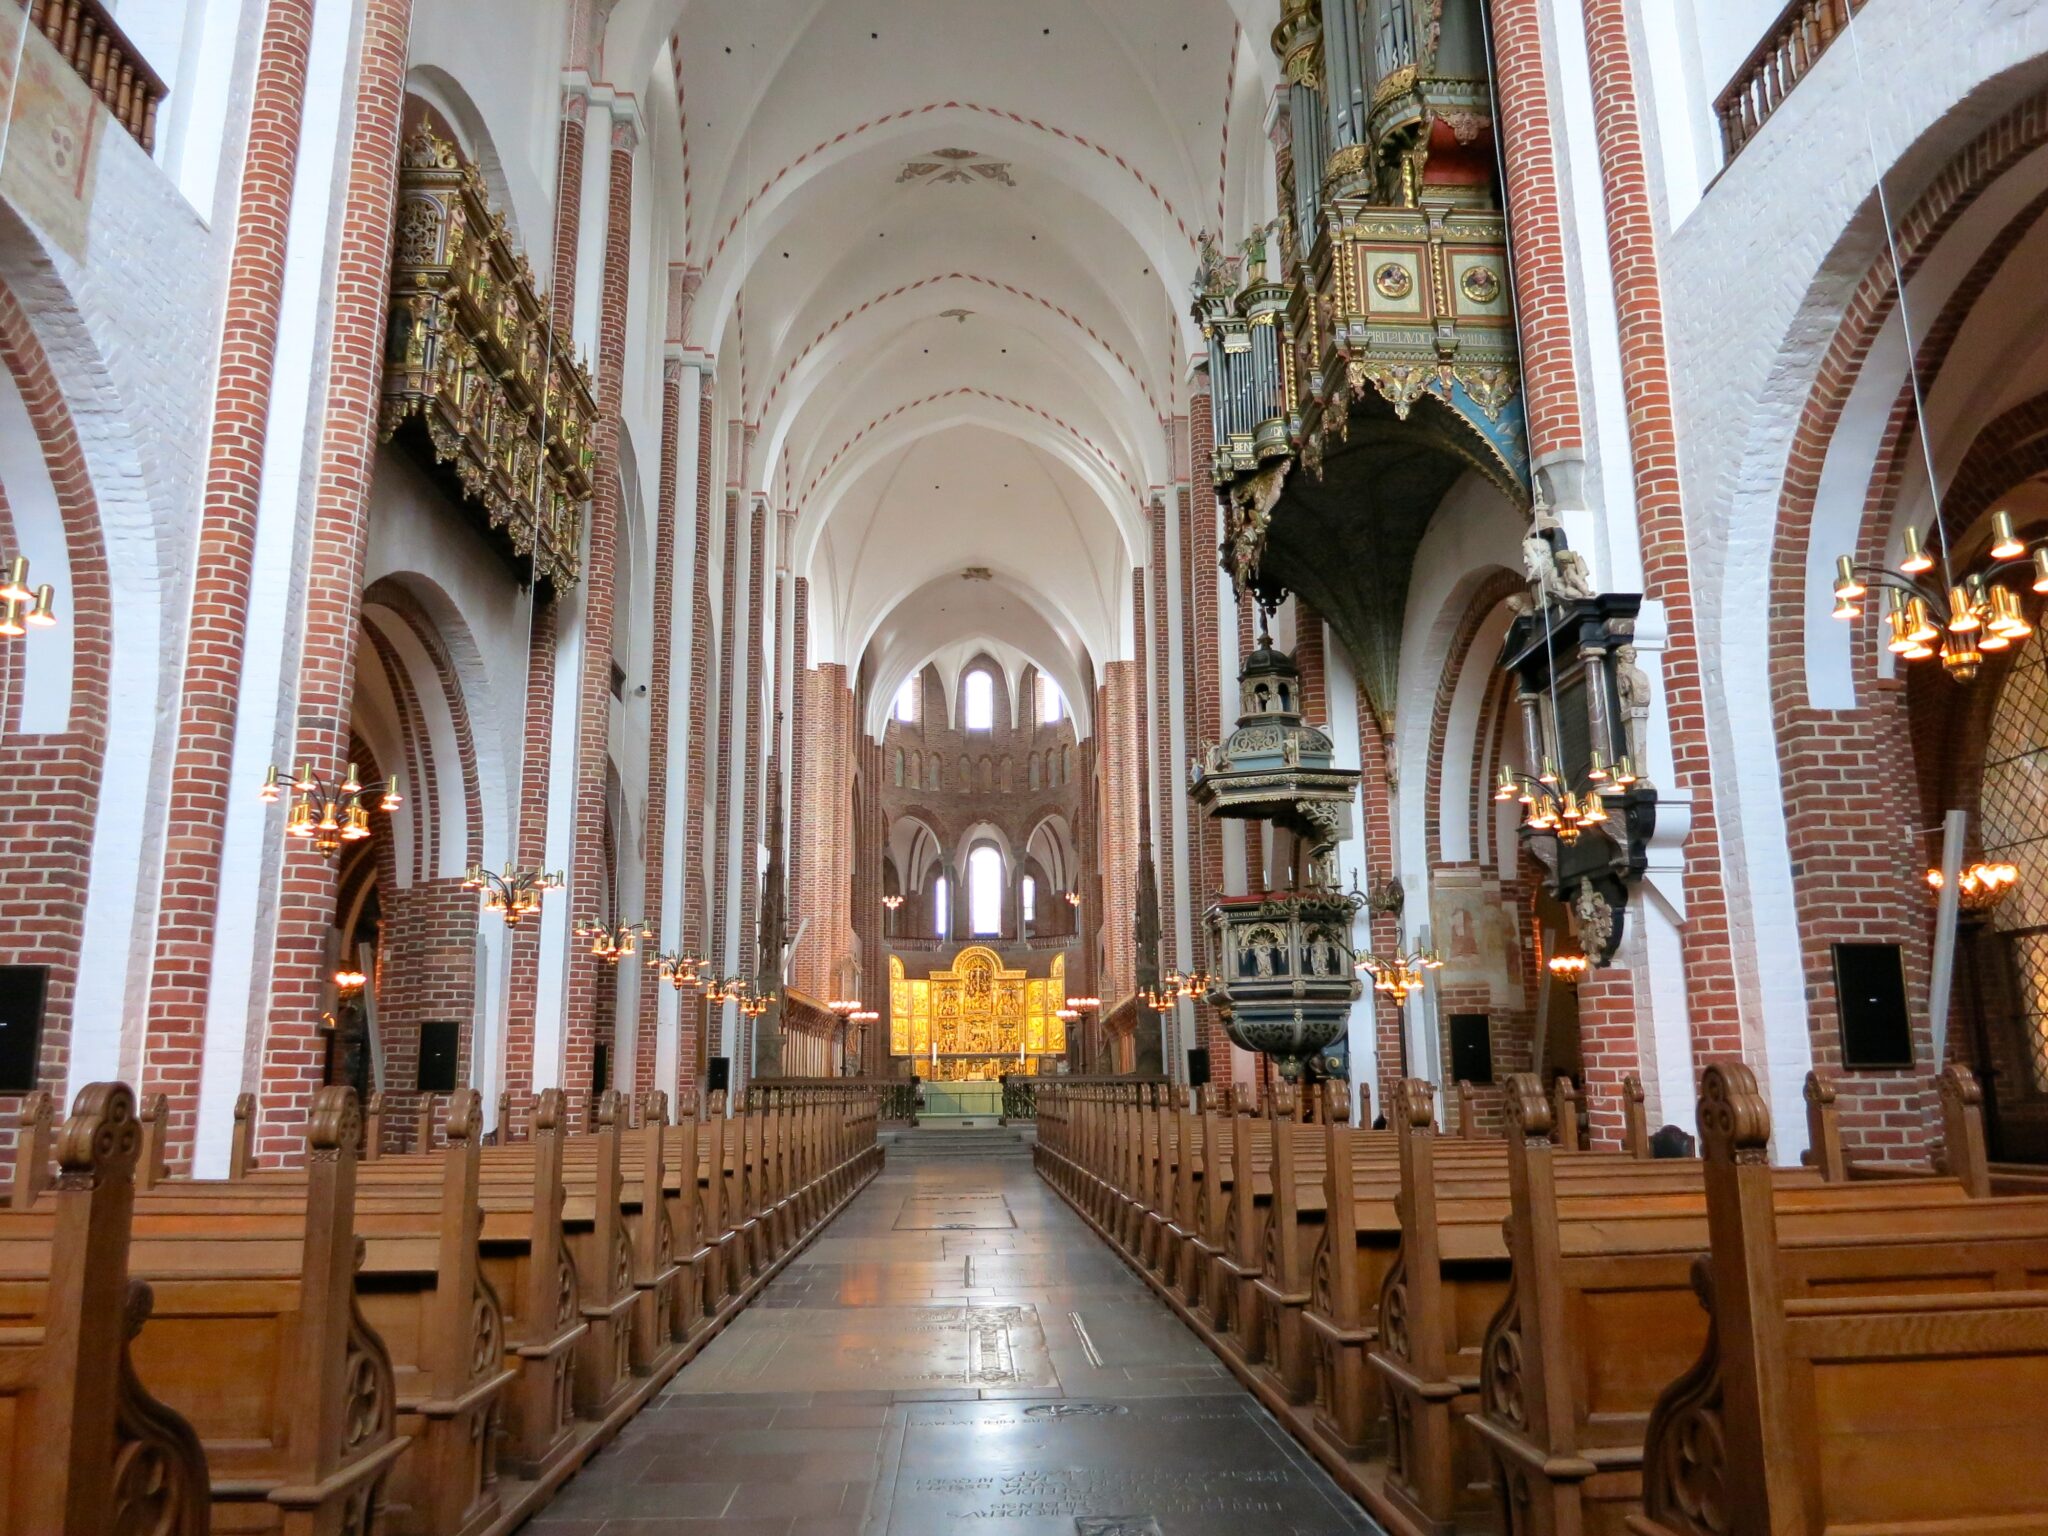 Roskilde Domkirke 1